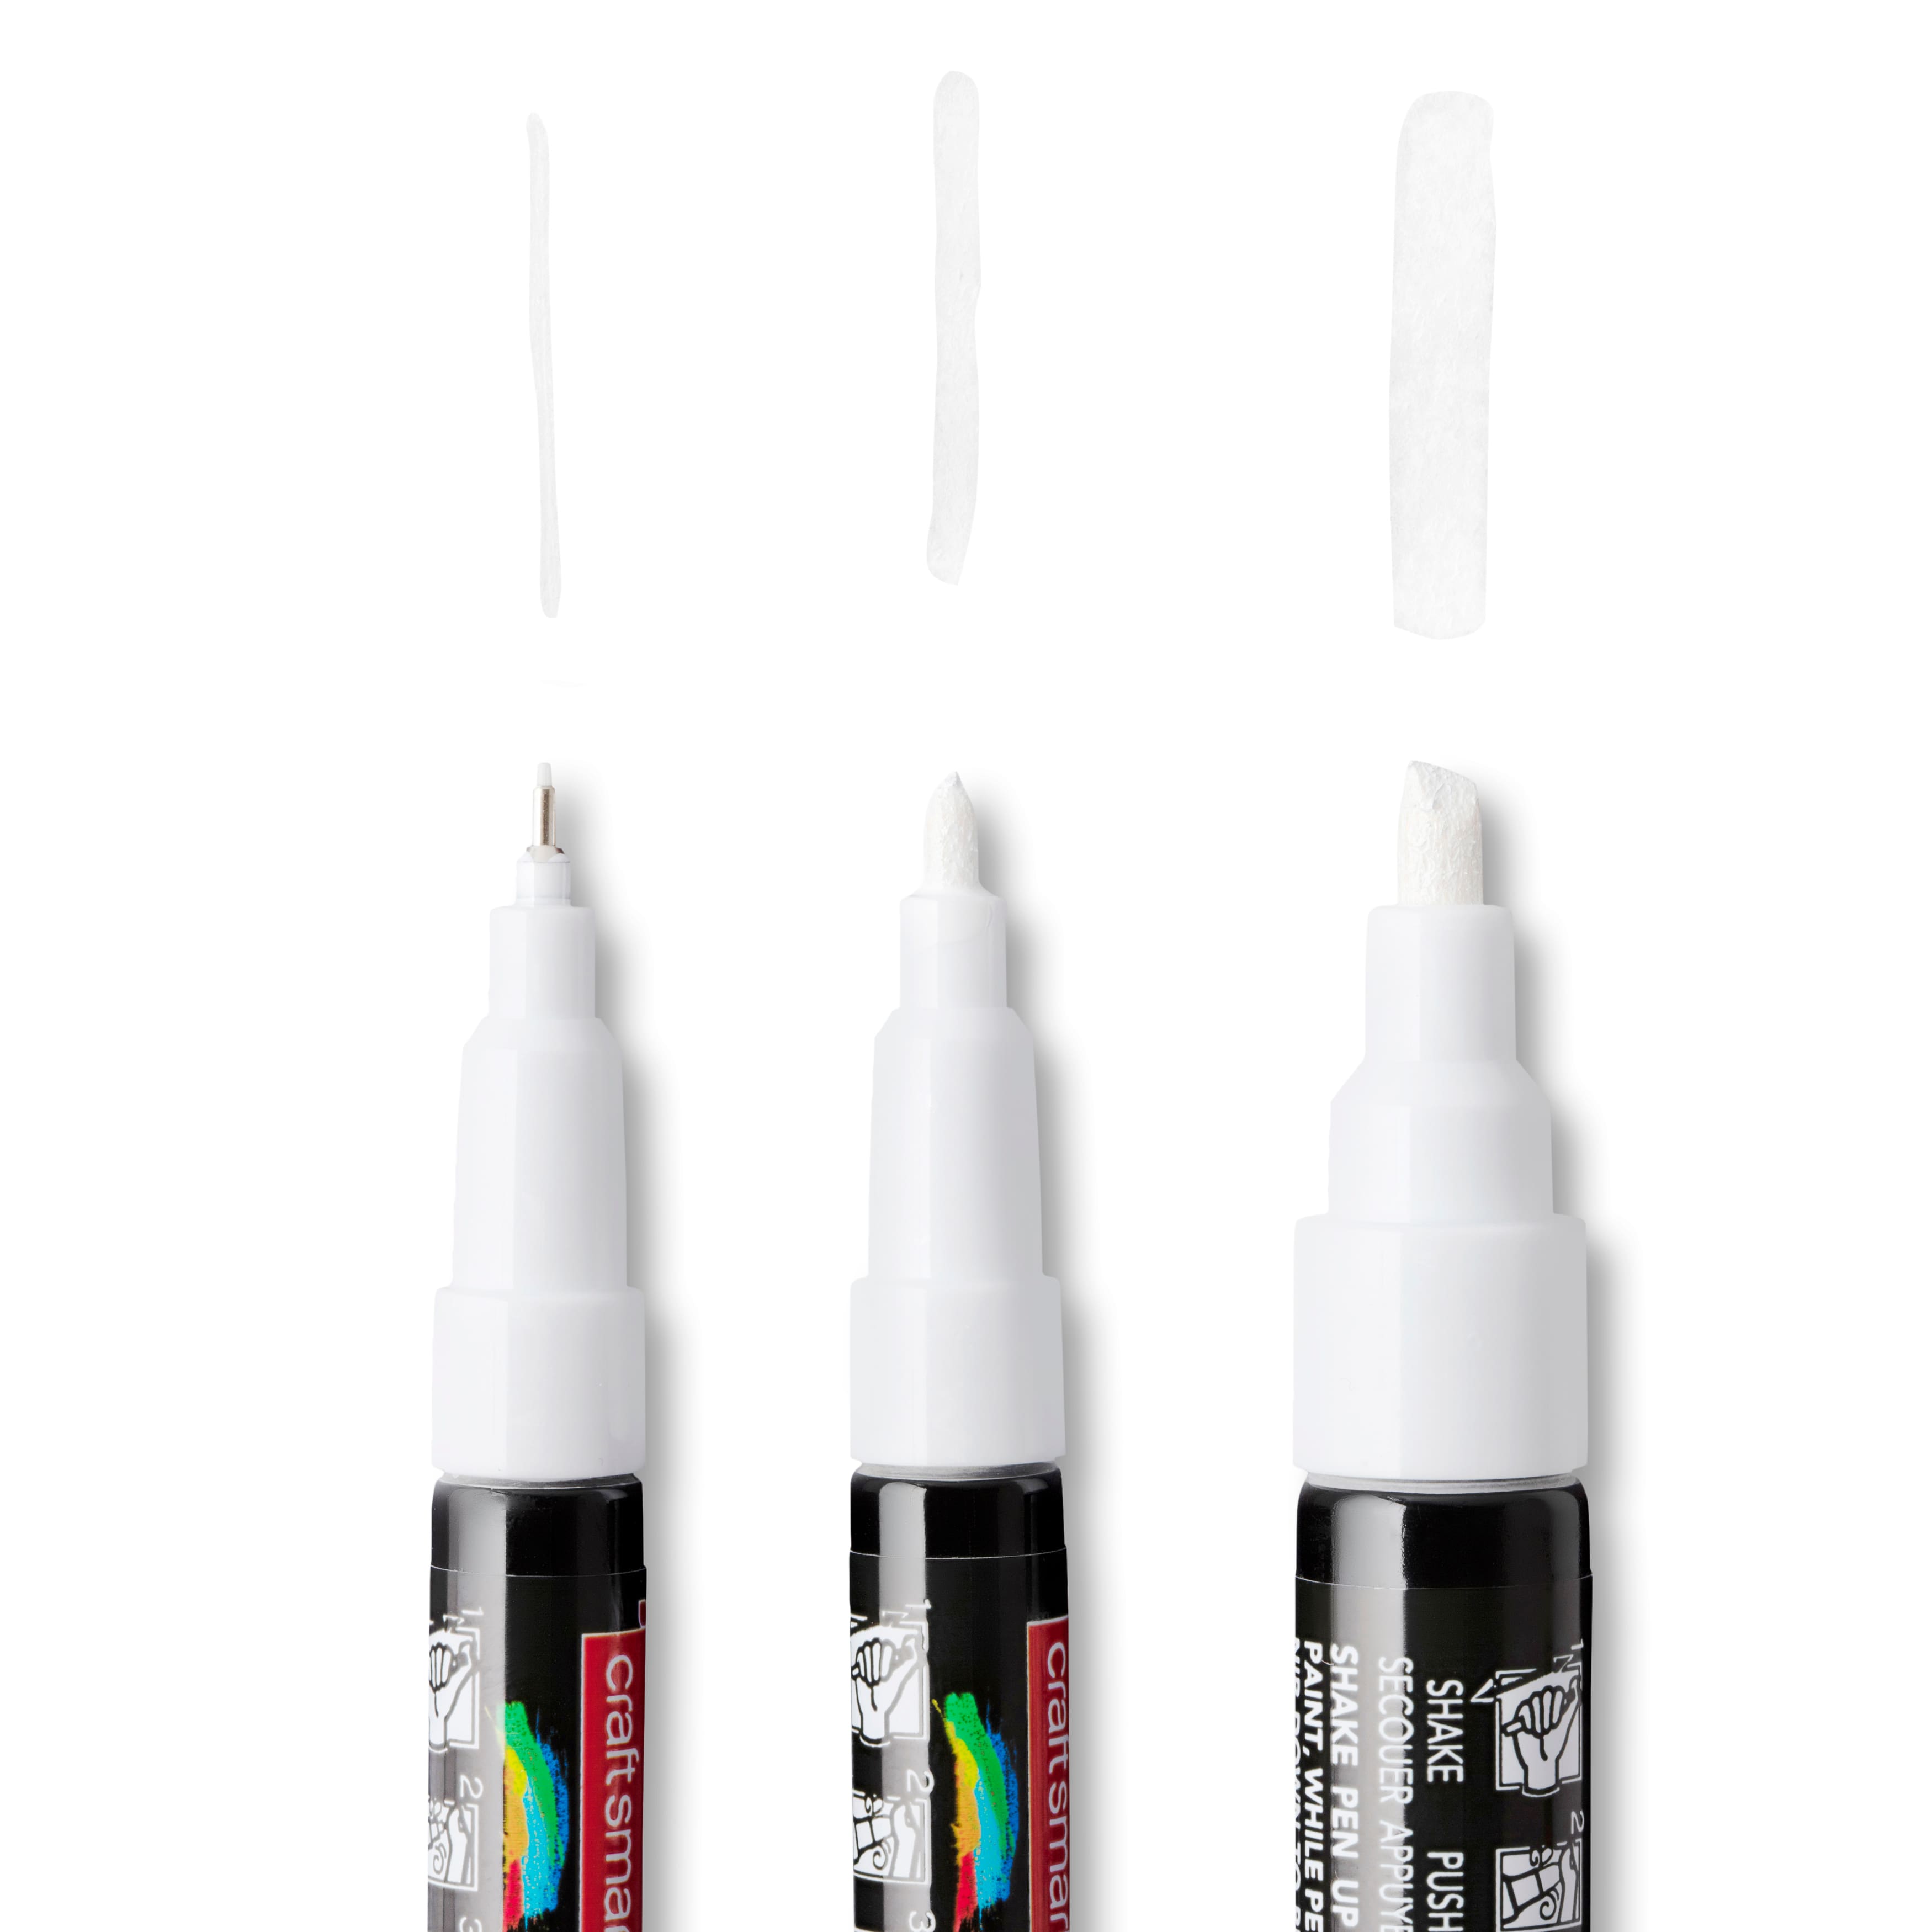 CraftSmart 621357 Multi Surface Premium Oil Based Paint Pens Set of 6pc for  sale online